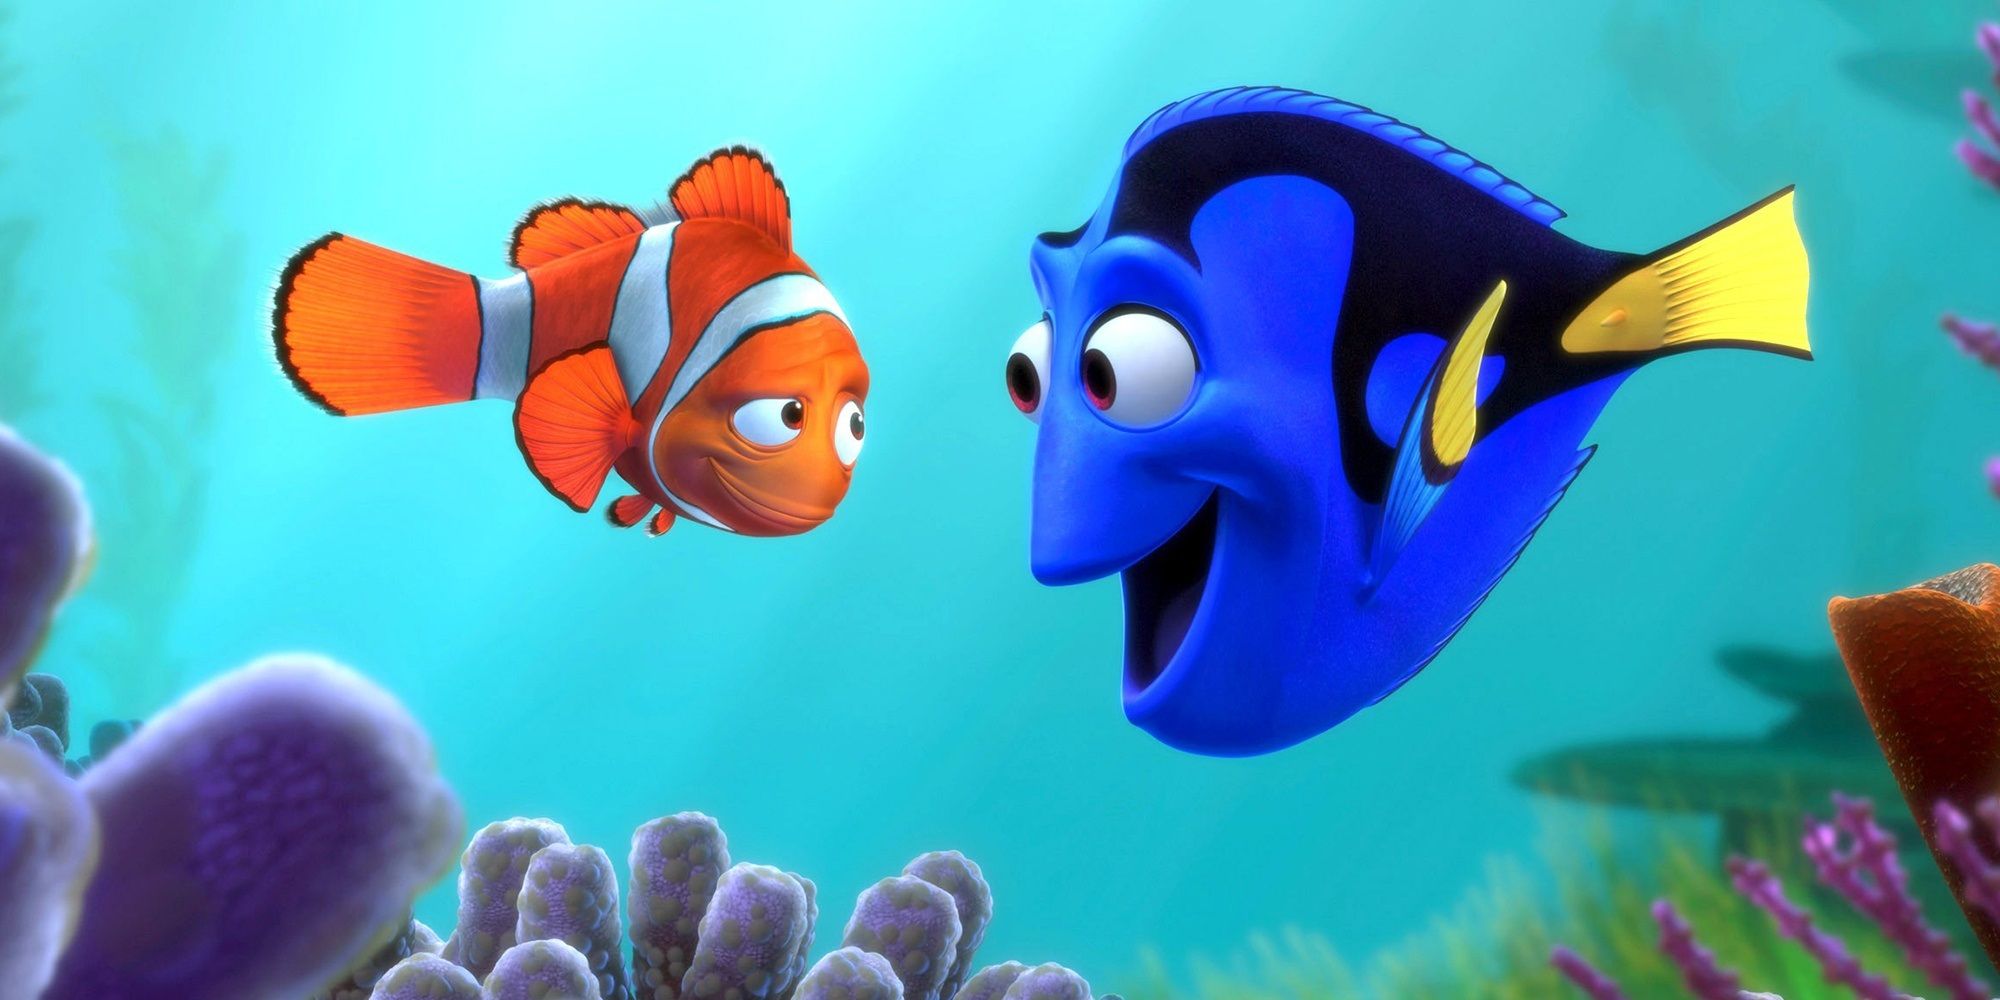 Le monde de Nemo - Marlin et Dory se regardent